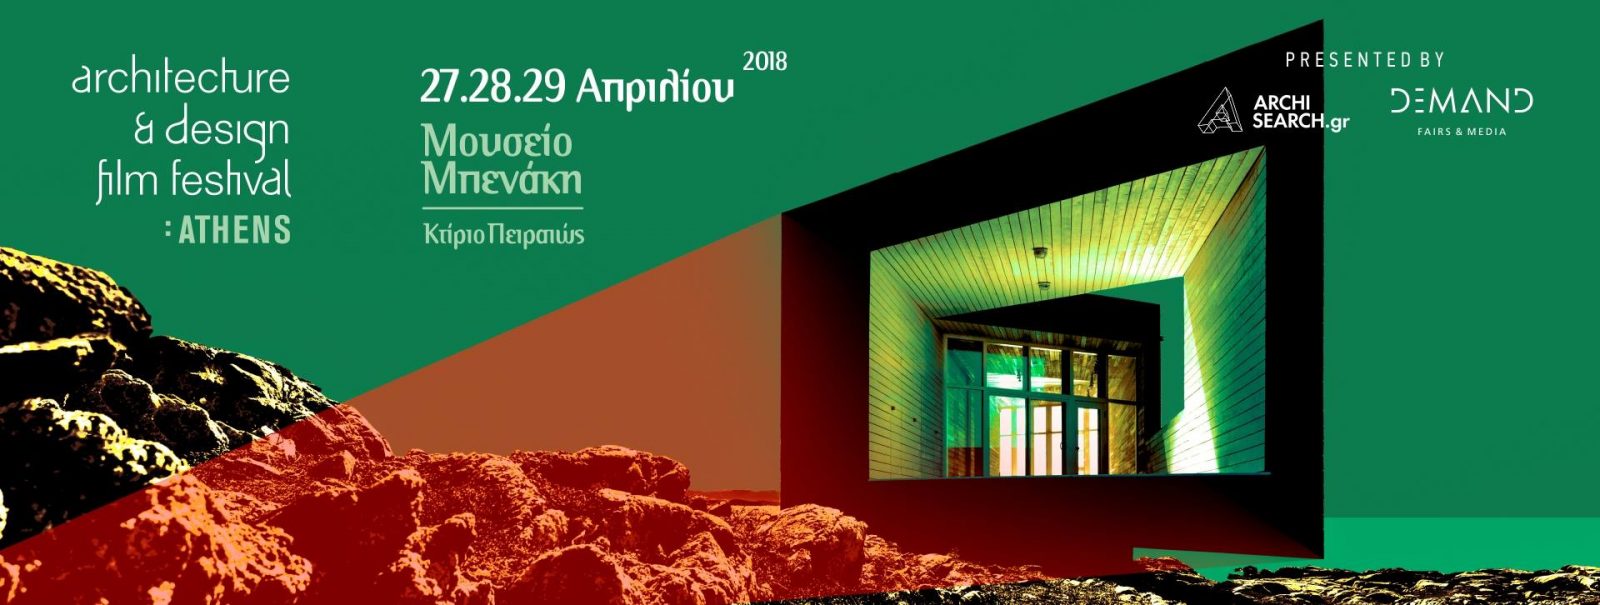 Archisearch ARCHITECTURE & DESIGN FILM FESTIVAL: οι ταινίες του Φεστιβάλ  | 27- 29 Απριλίoυ 2018, Μουσείο Μπενάκη